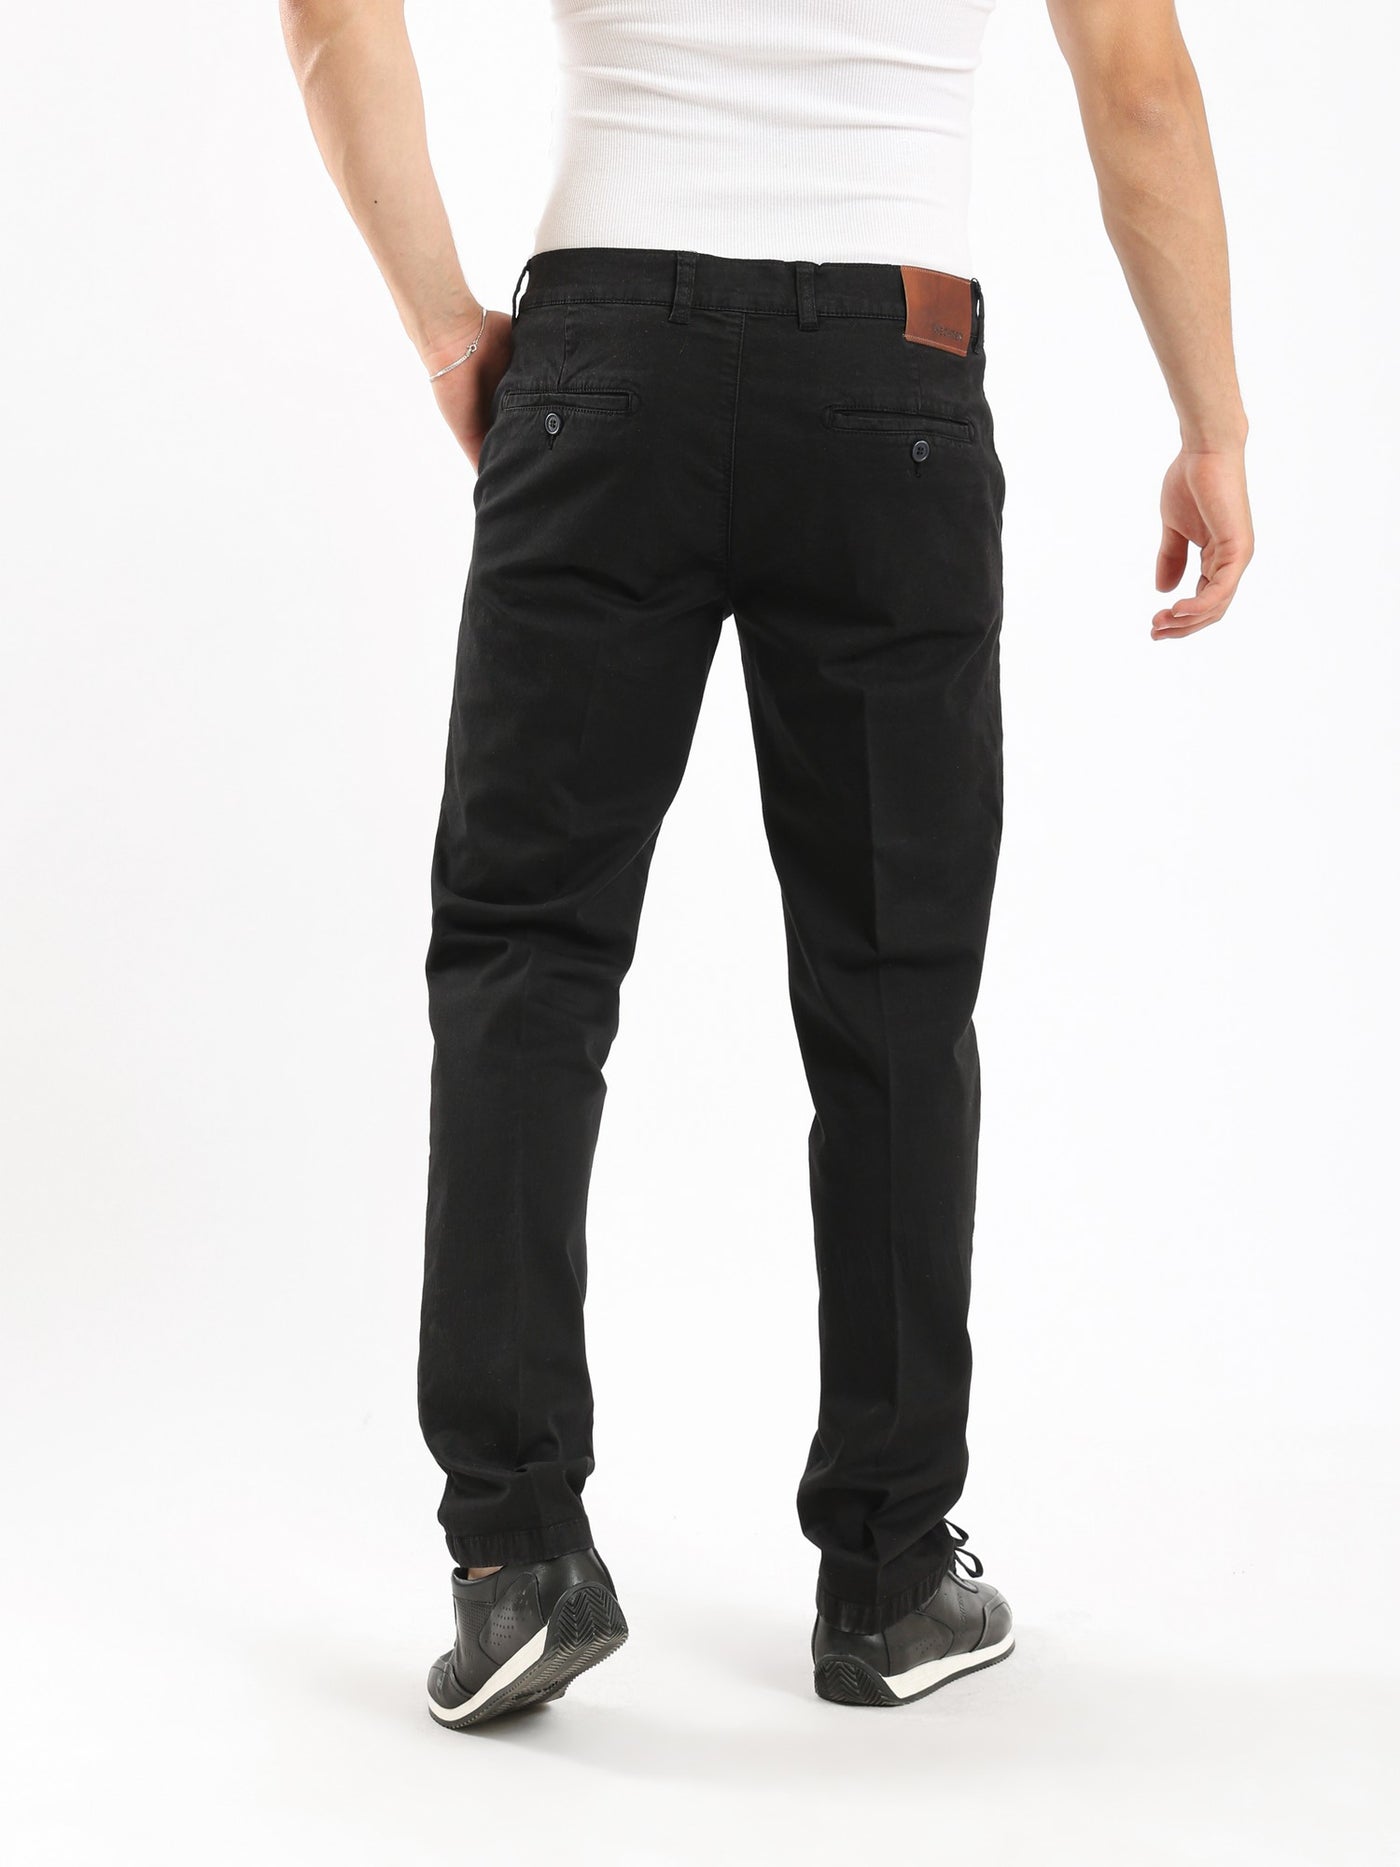 Pants - Belt Loop - With Pockets